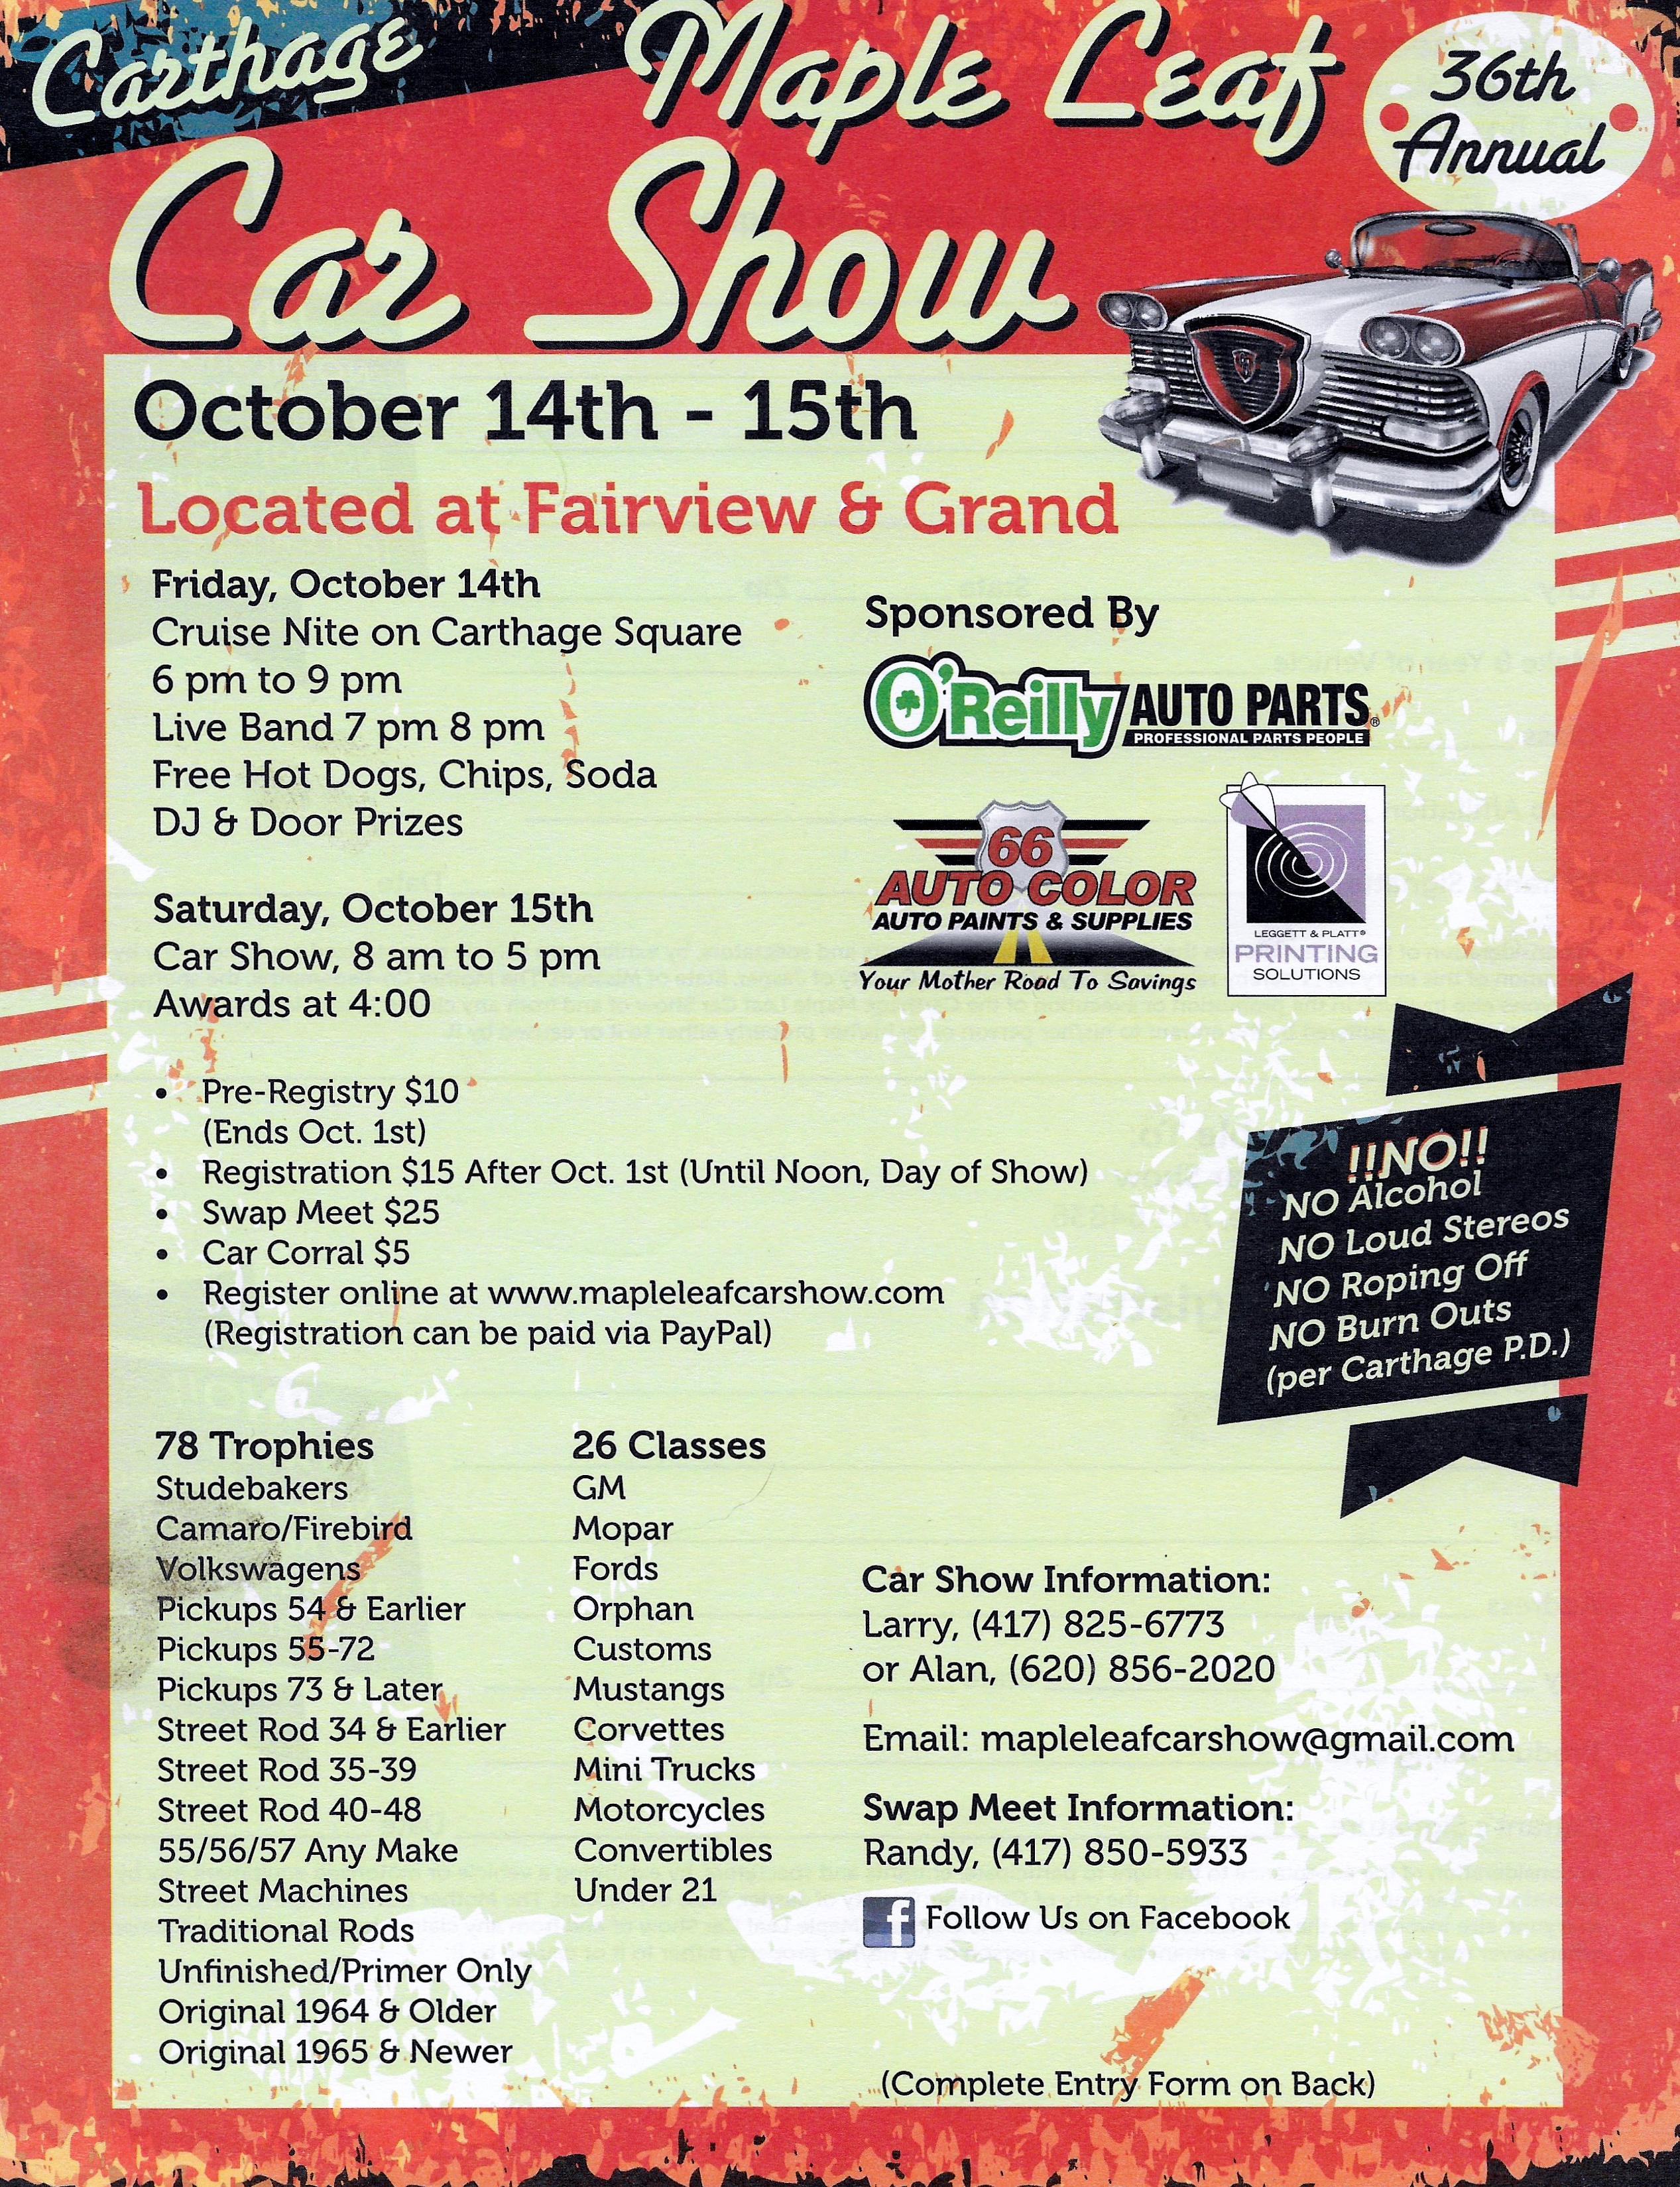 Carthage Maple Leaf Car Show Hotrod Hotline